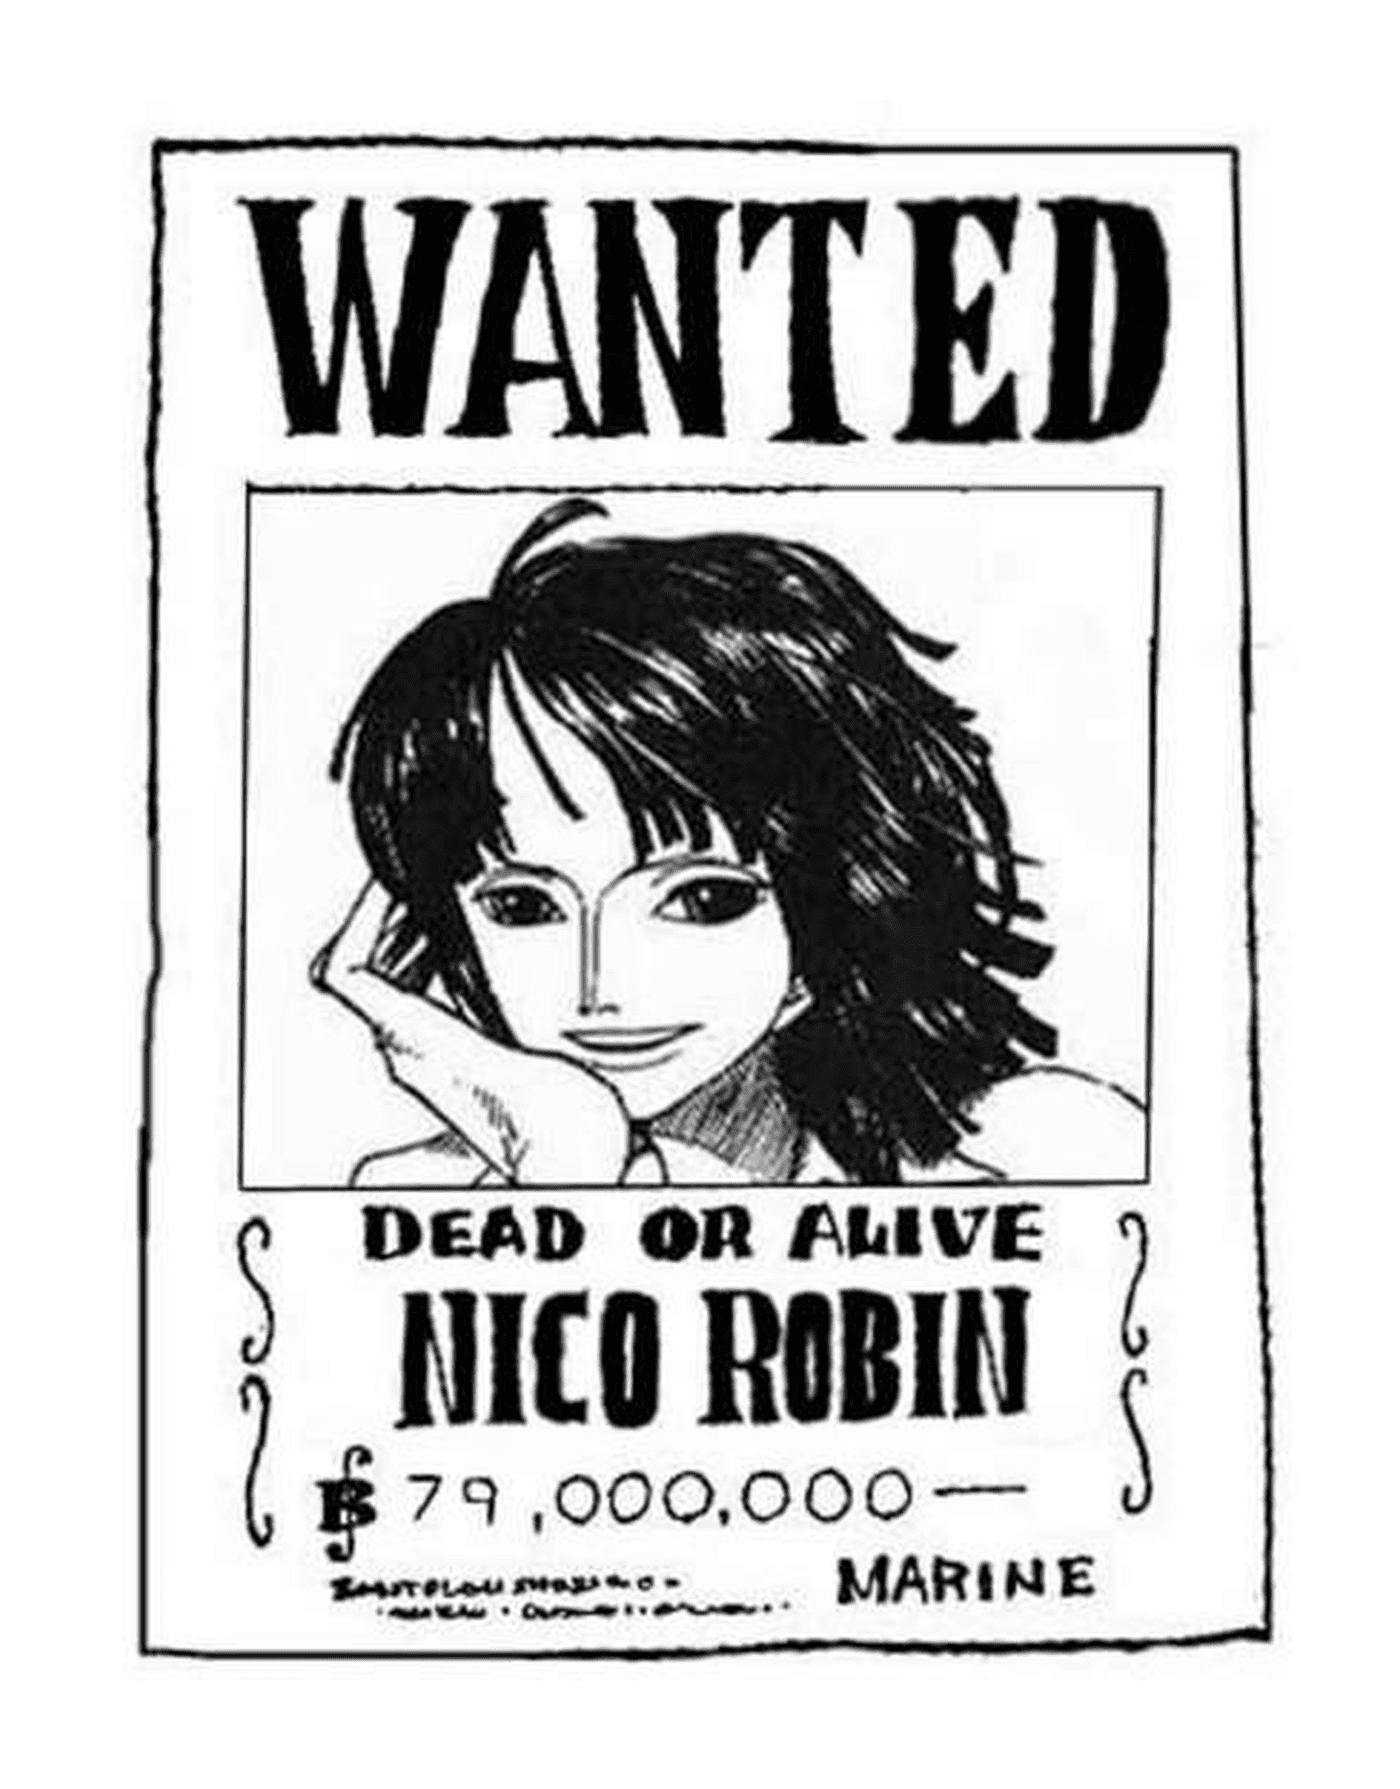  Ricercato Nico Robin[20420] Ricercato Nico Robin, vivo o morto 